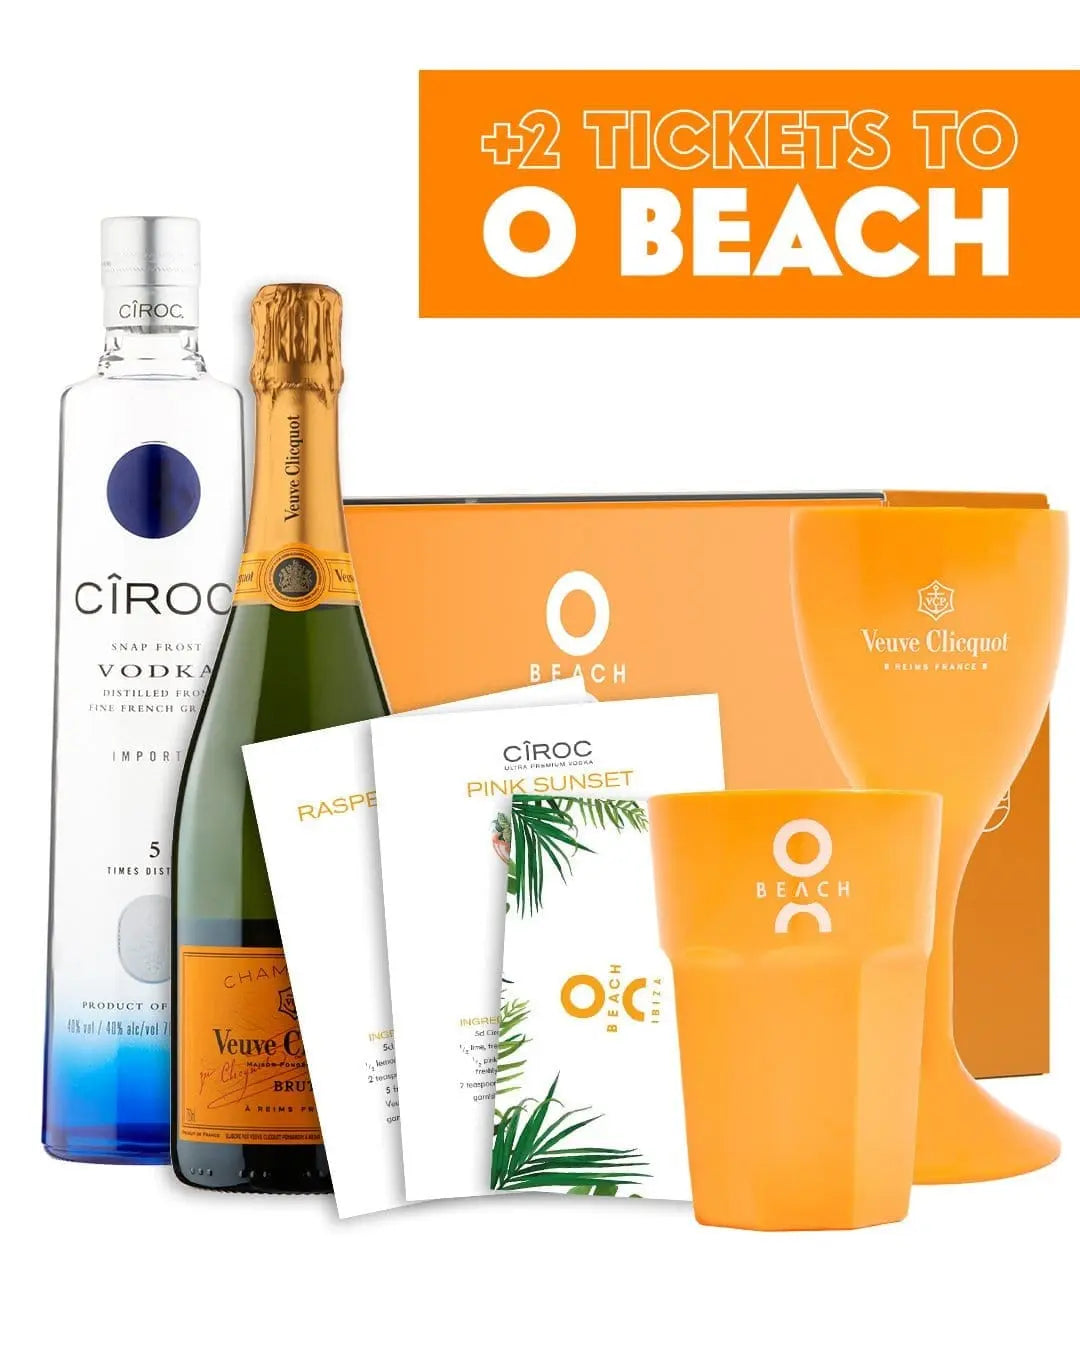 O Beach x The Bottle Club VVIP Gift Box Vodka